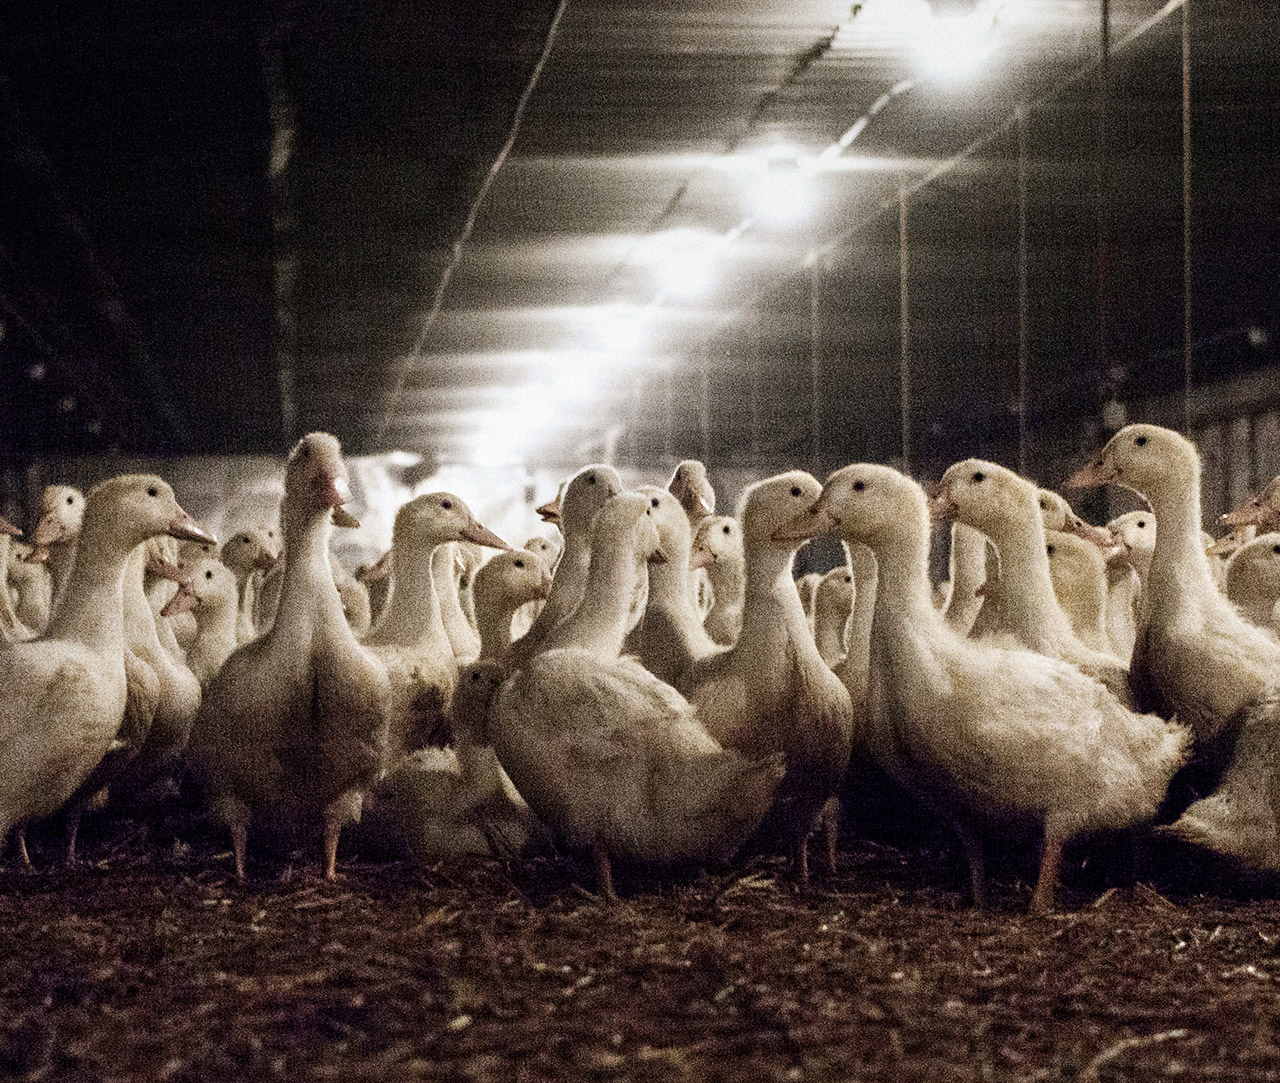 Ducks in a factory farm